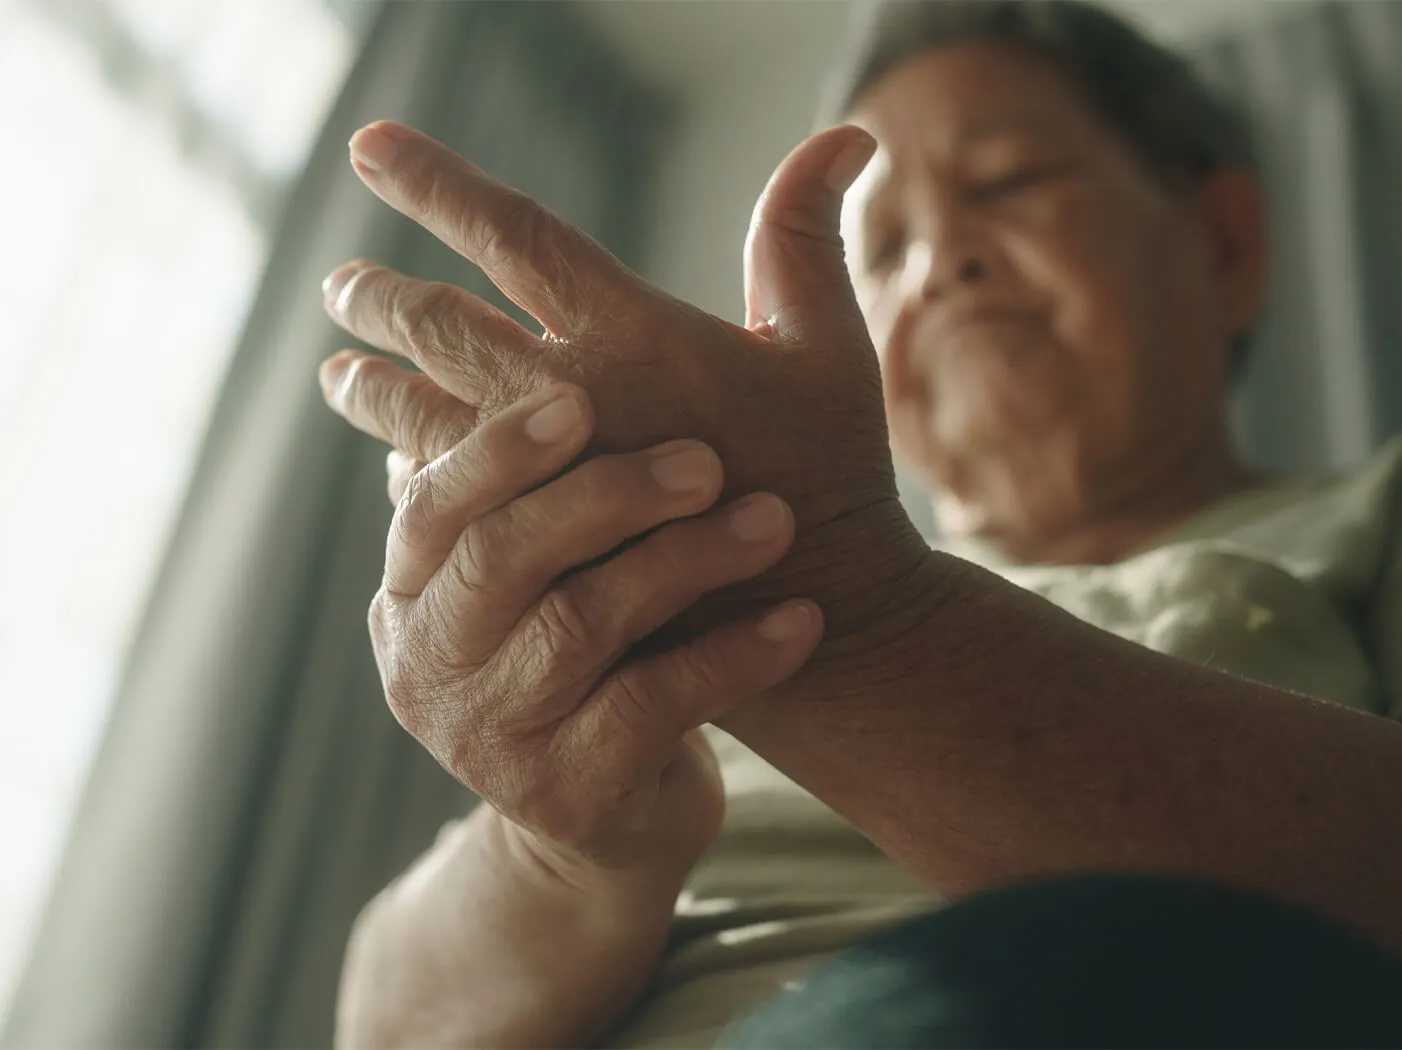 A person clutches their hand.